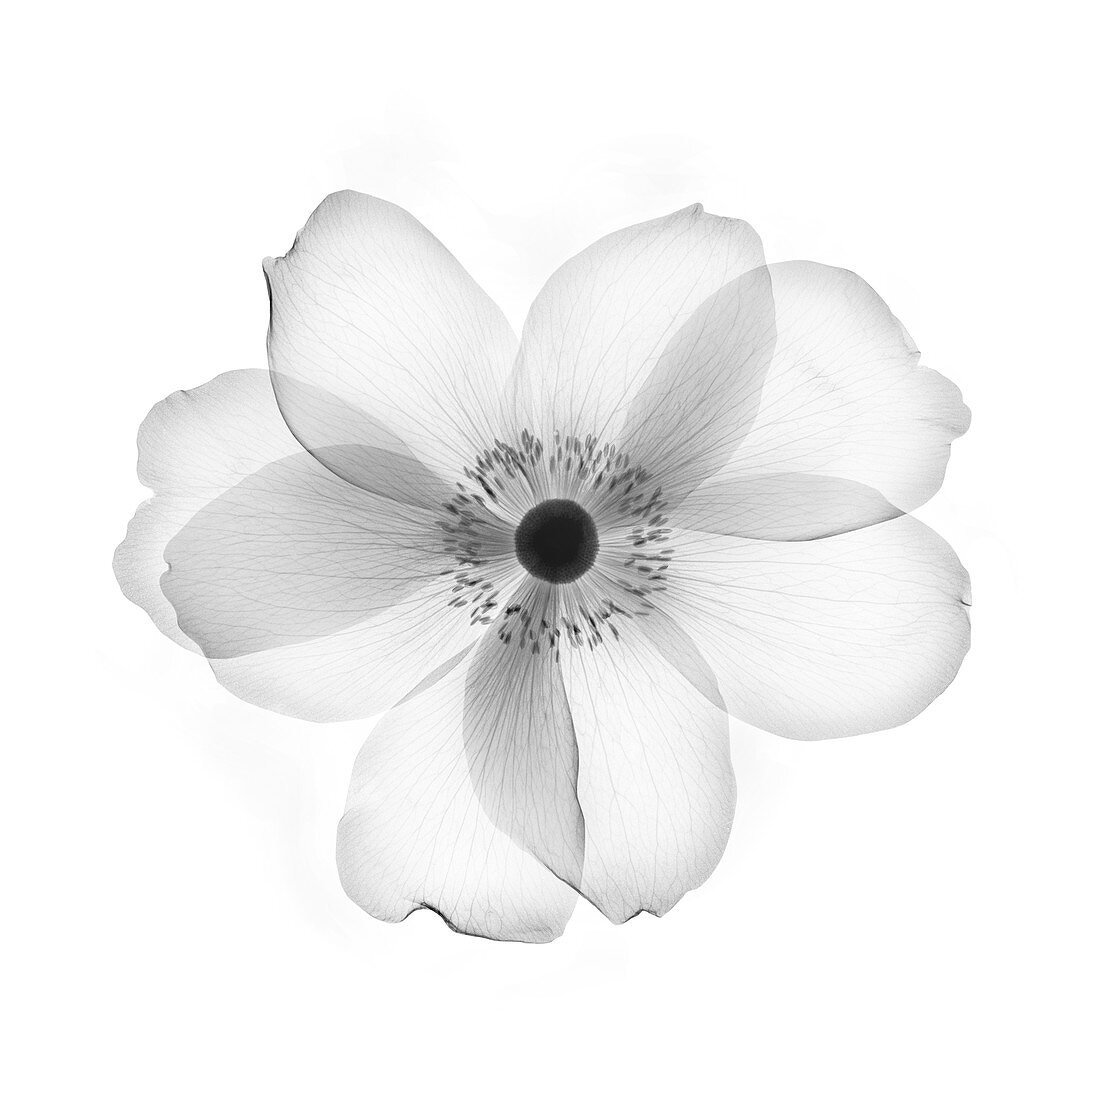 Anemone flower head, X-ray